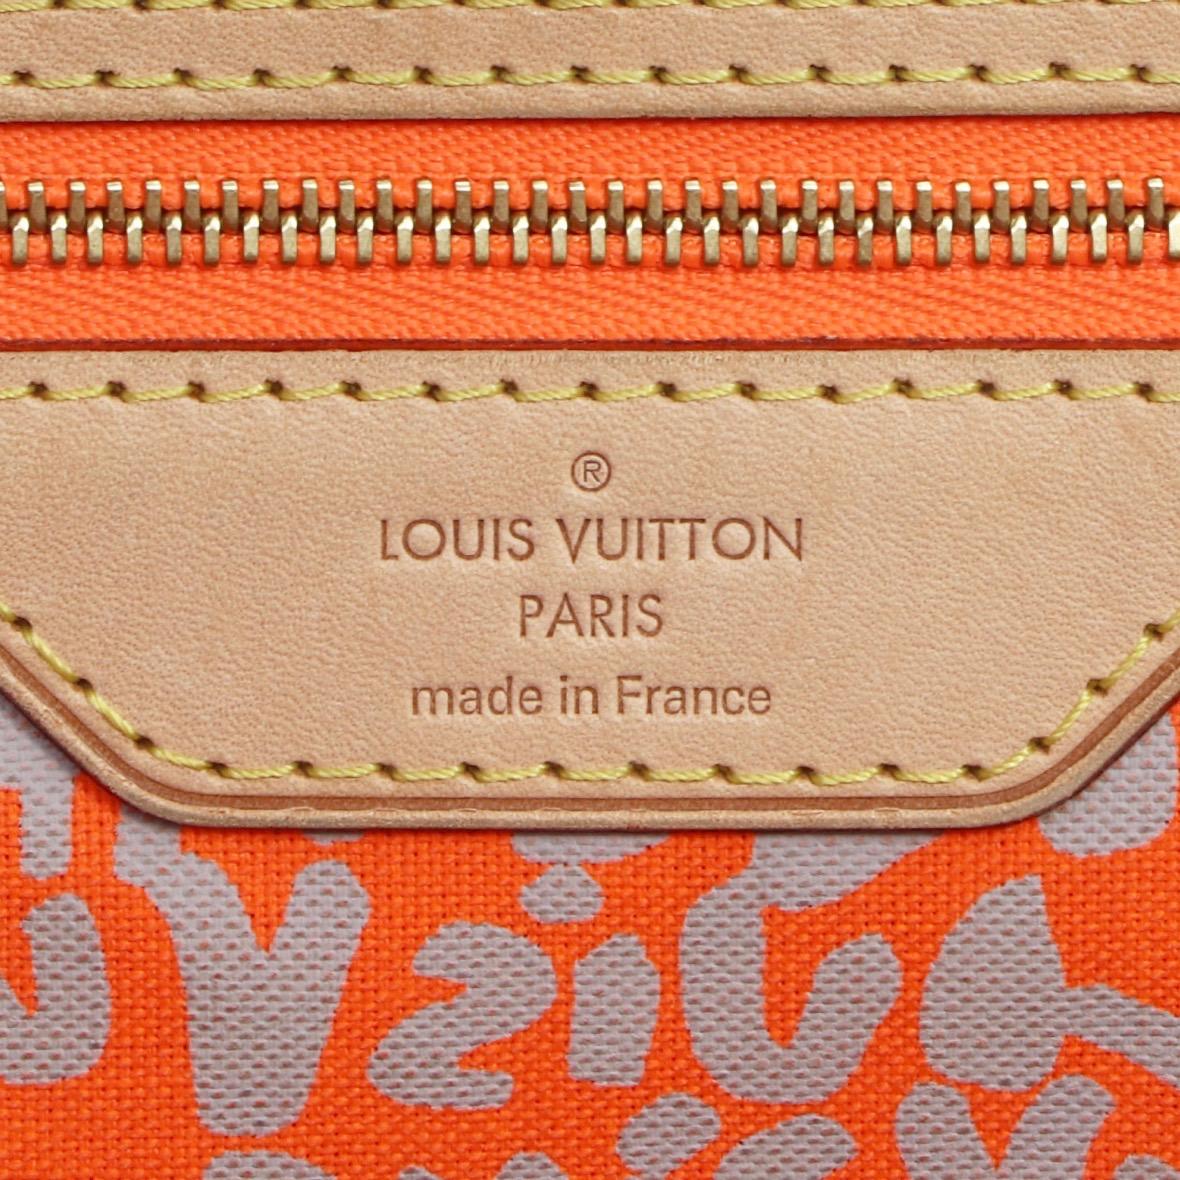 Louis Vuitton Neverfull GM Bag in Monogram Graffiti with Orange Interior 2009 15